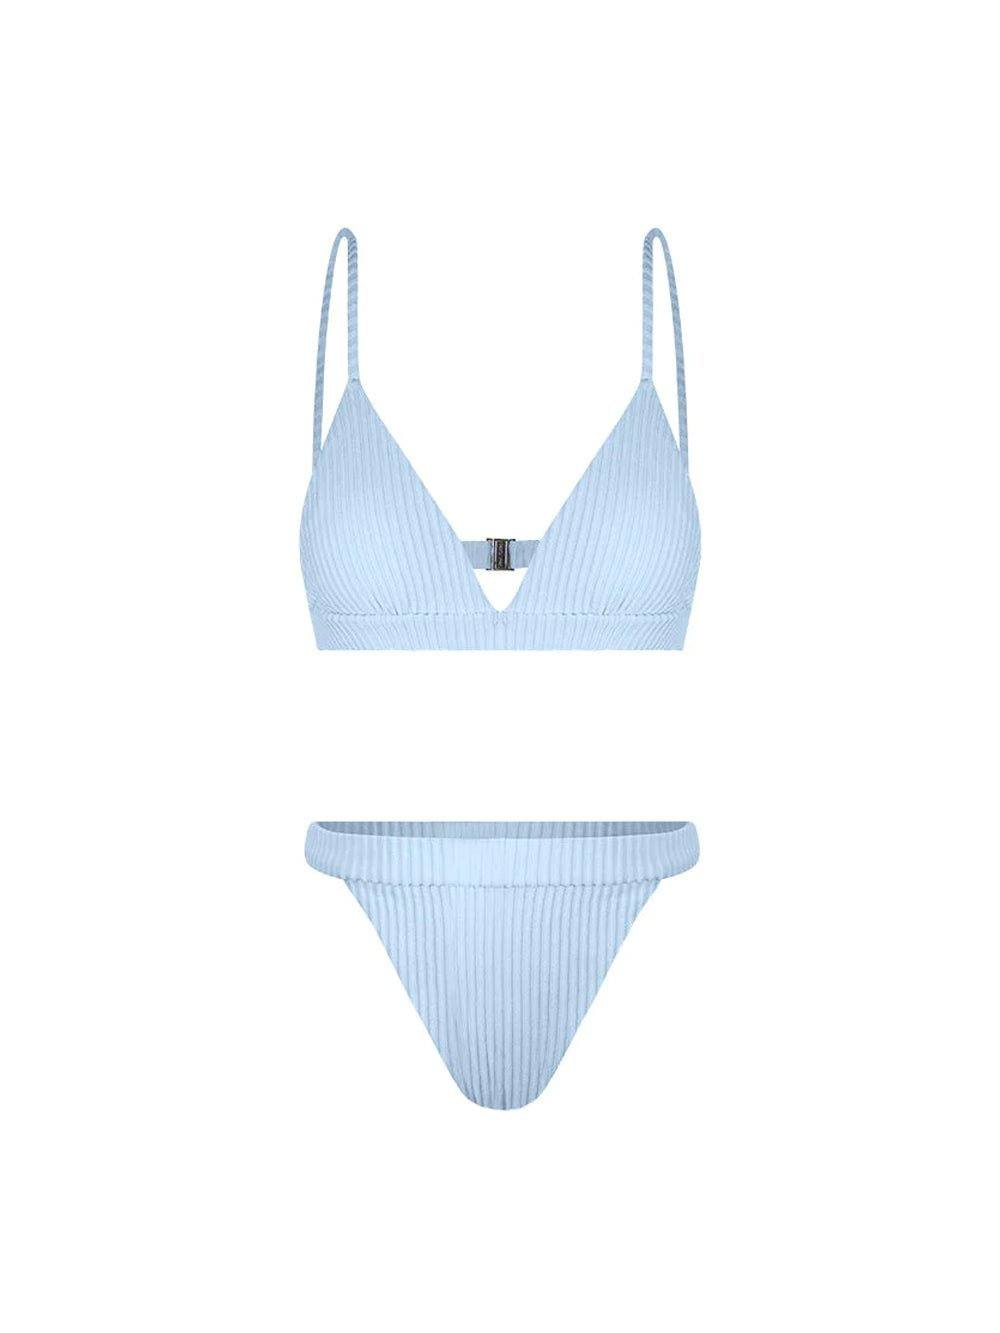 Adjustable Triangle Bikini - Baby Blue  - OCEAN MYSTERY